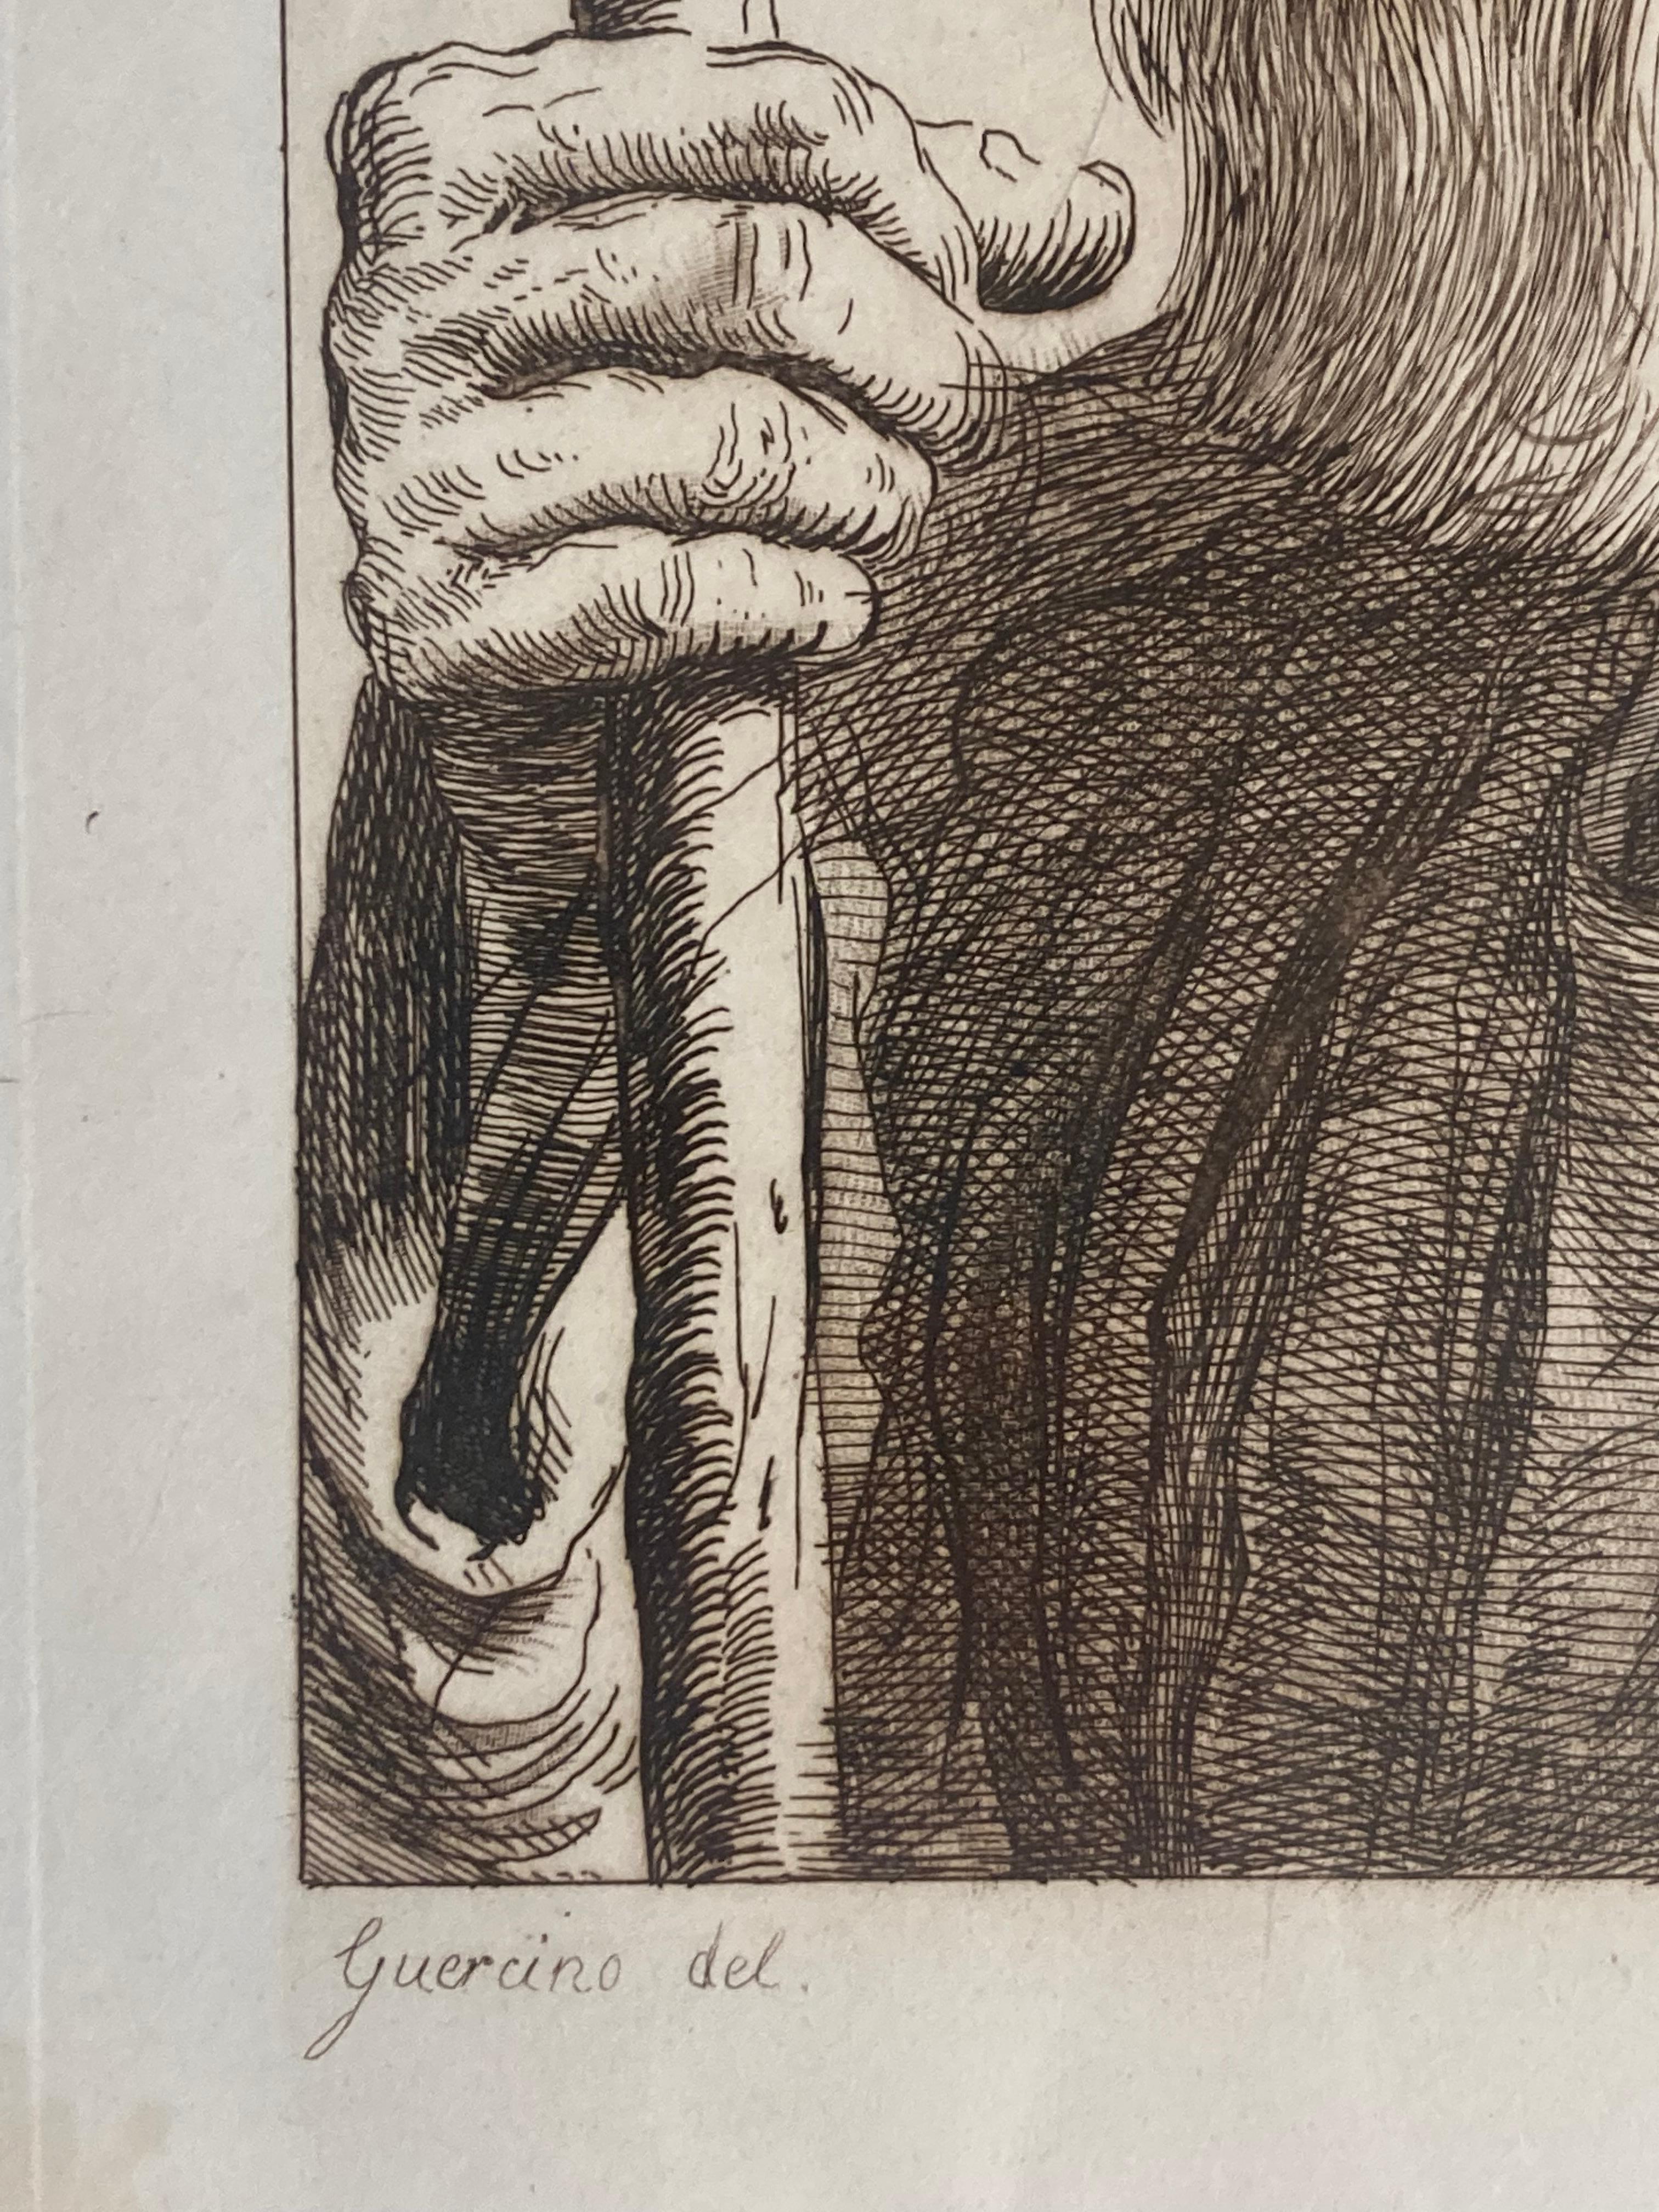 etch a sketch man with beard